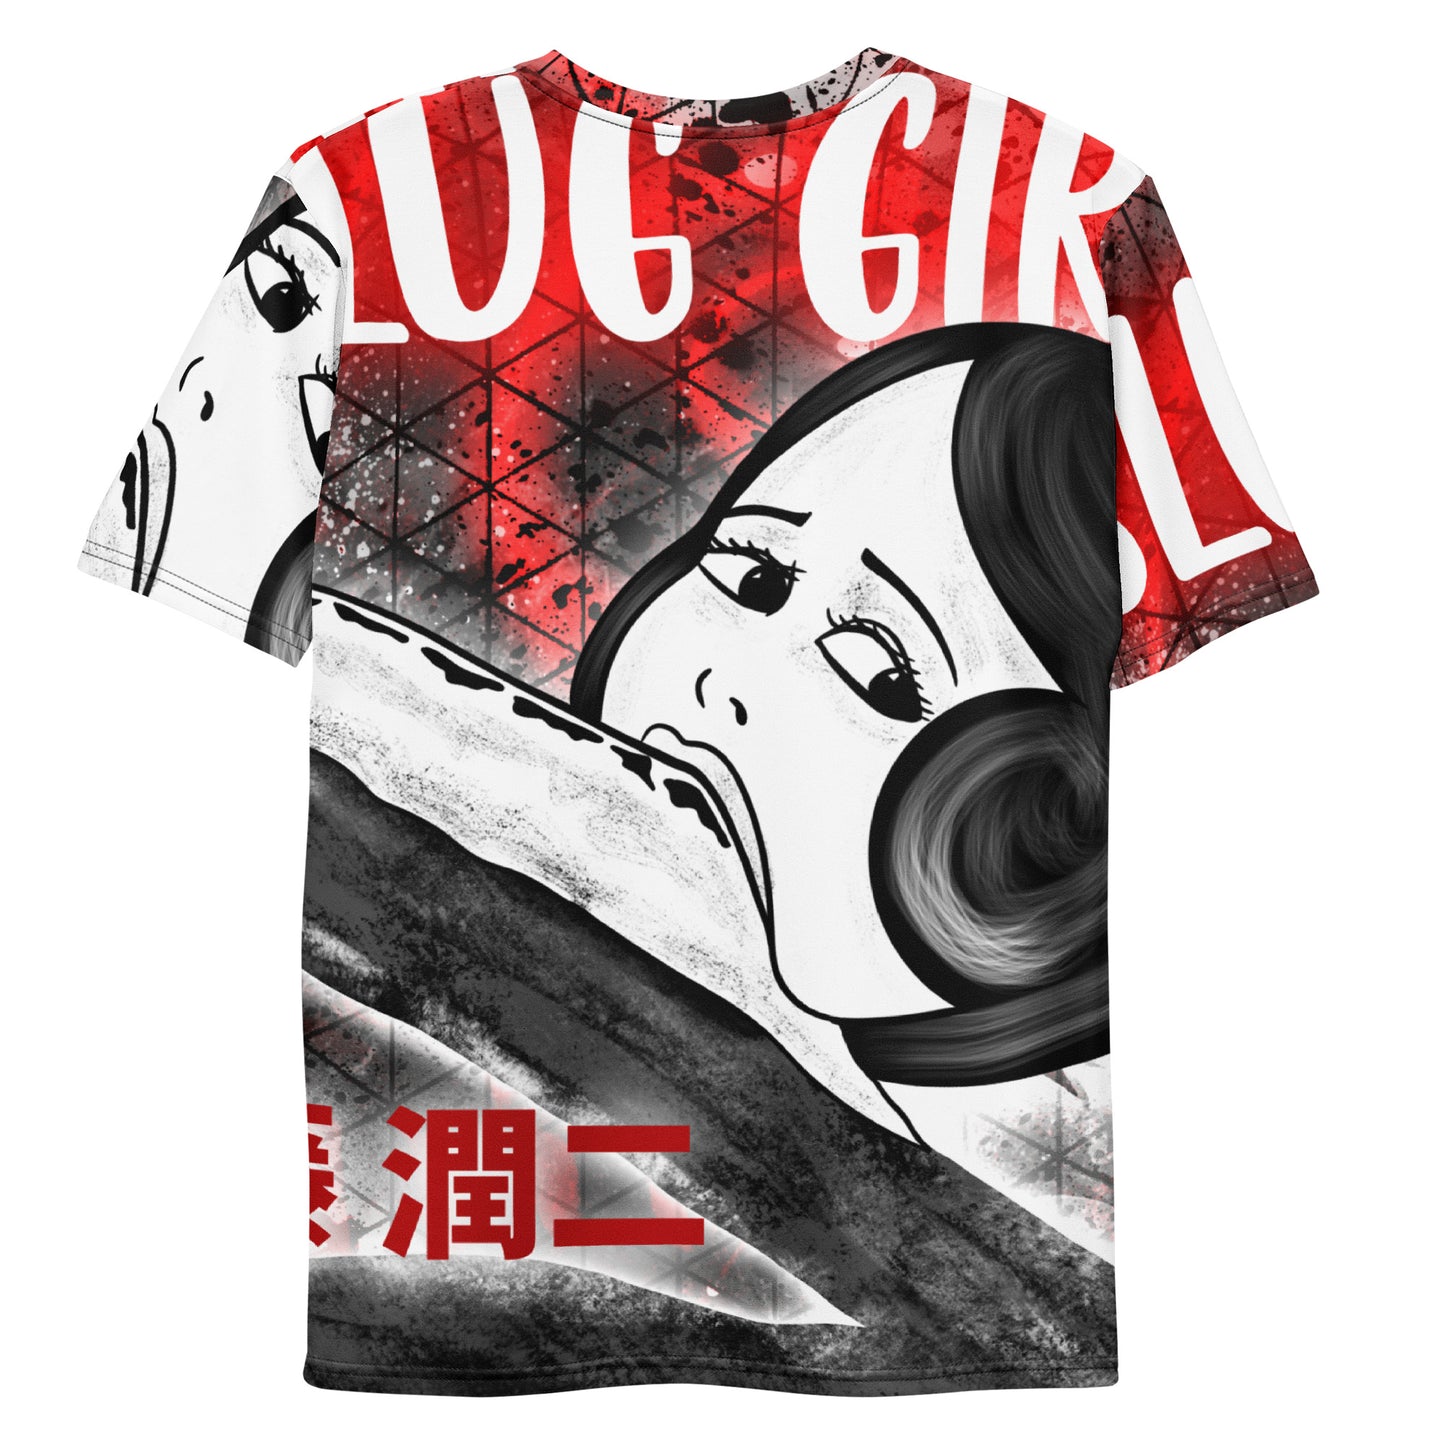 Slug Girl t-shirt